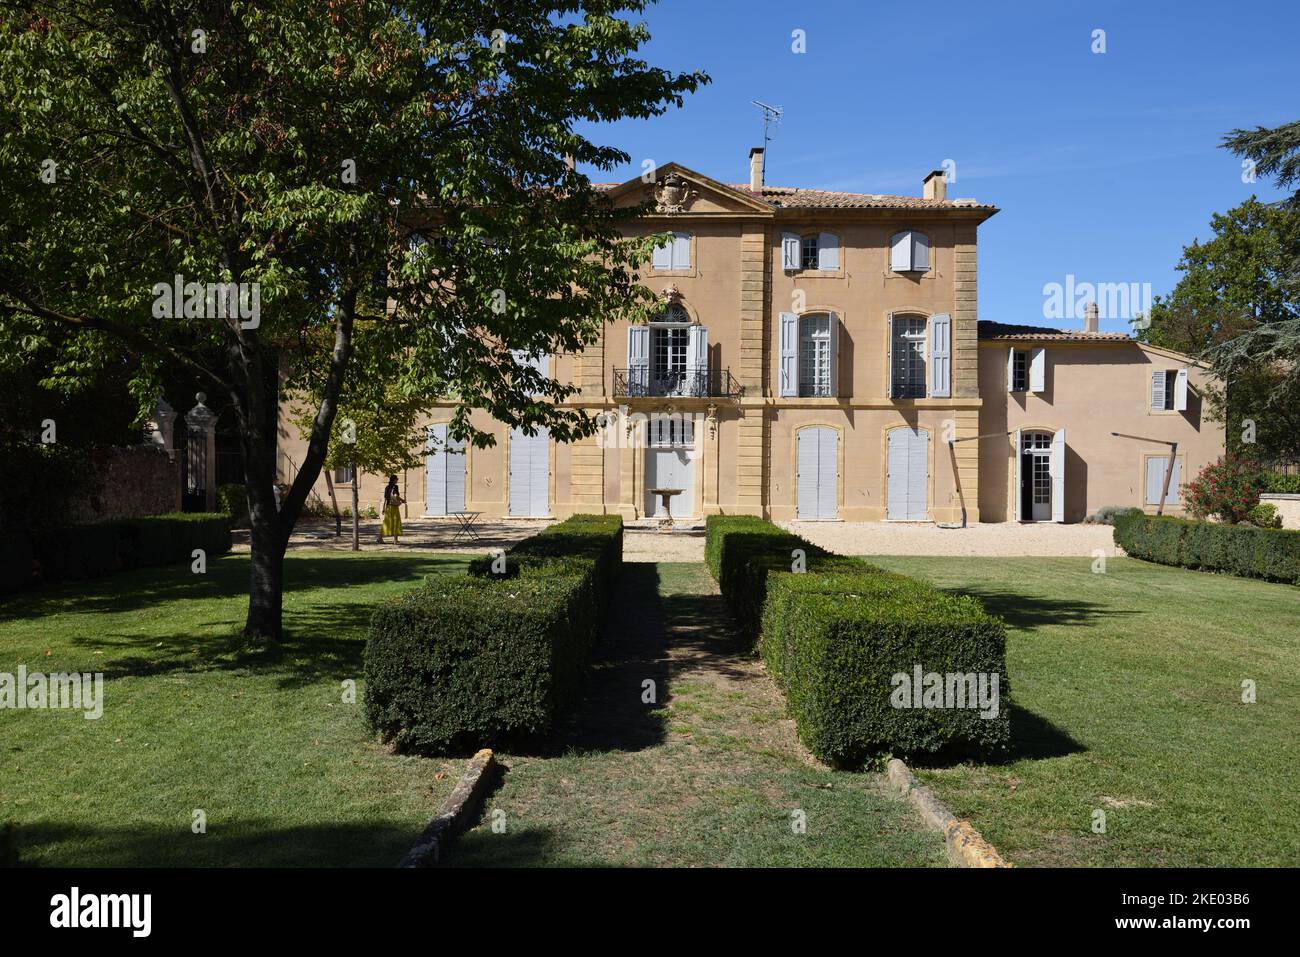 Bastide de la Fécilité e giardino francese formale. c18th Country House o Mansion, Aix-en-Provence Provenza Francia Foto Stock